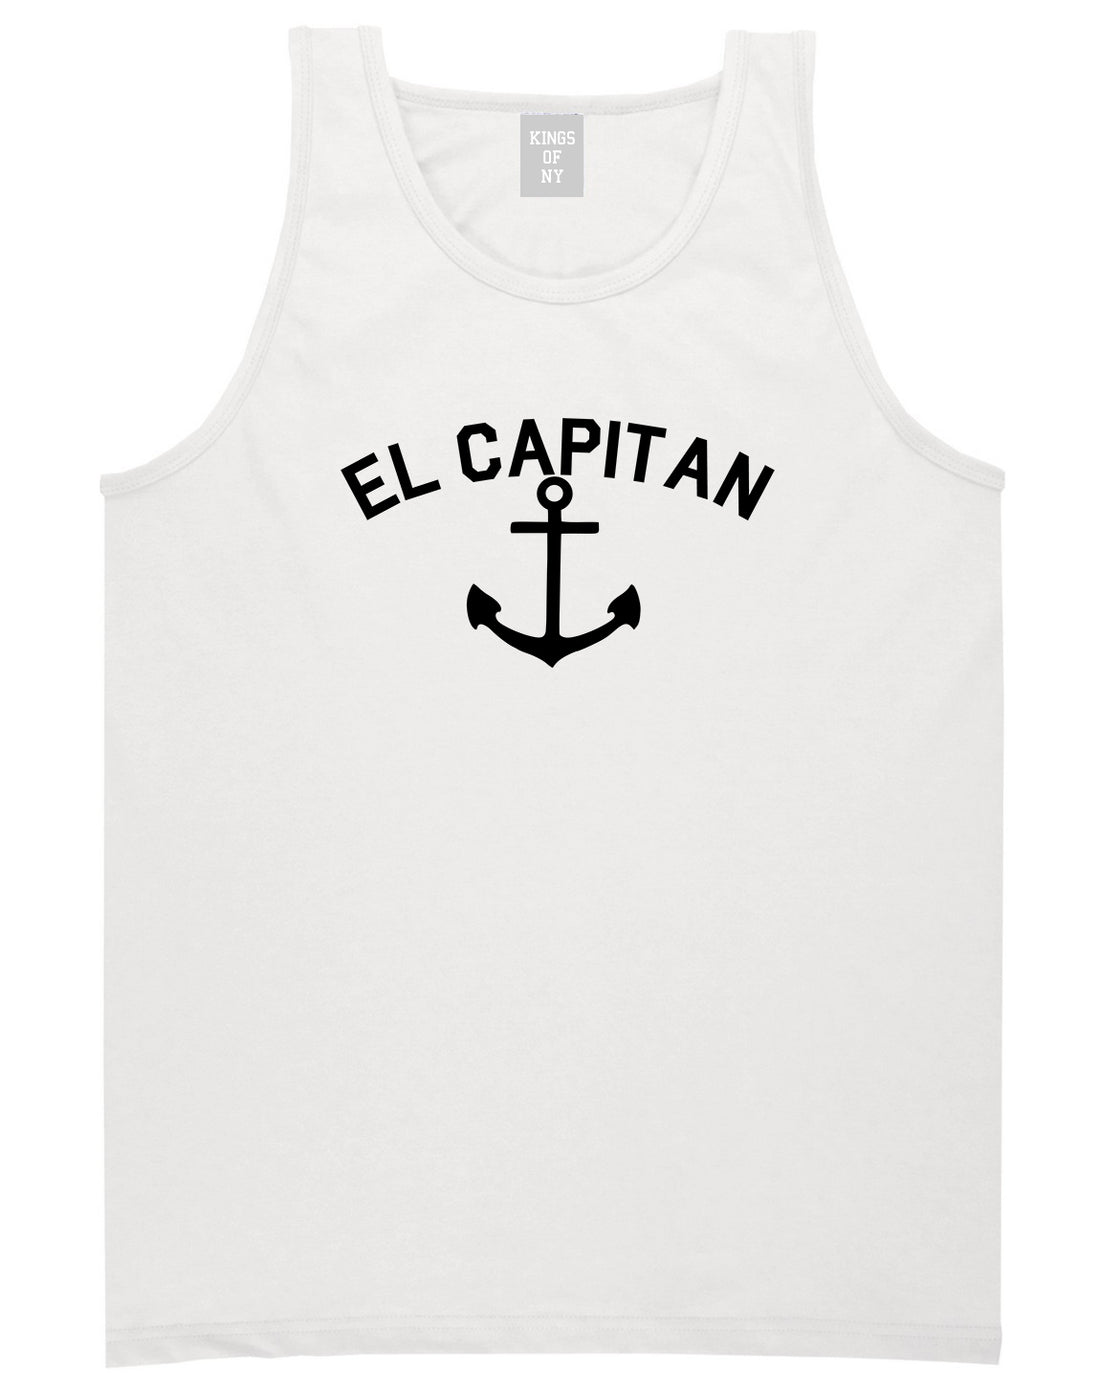 El Capitan Anchor Captain Mens Tank Top Shirt White